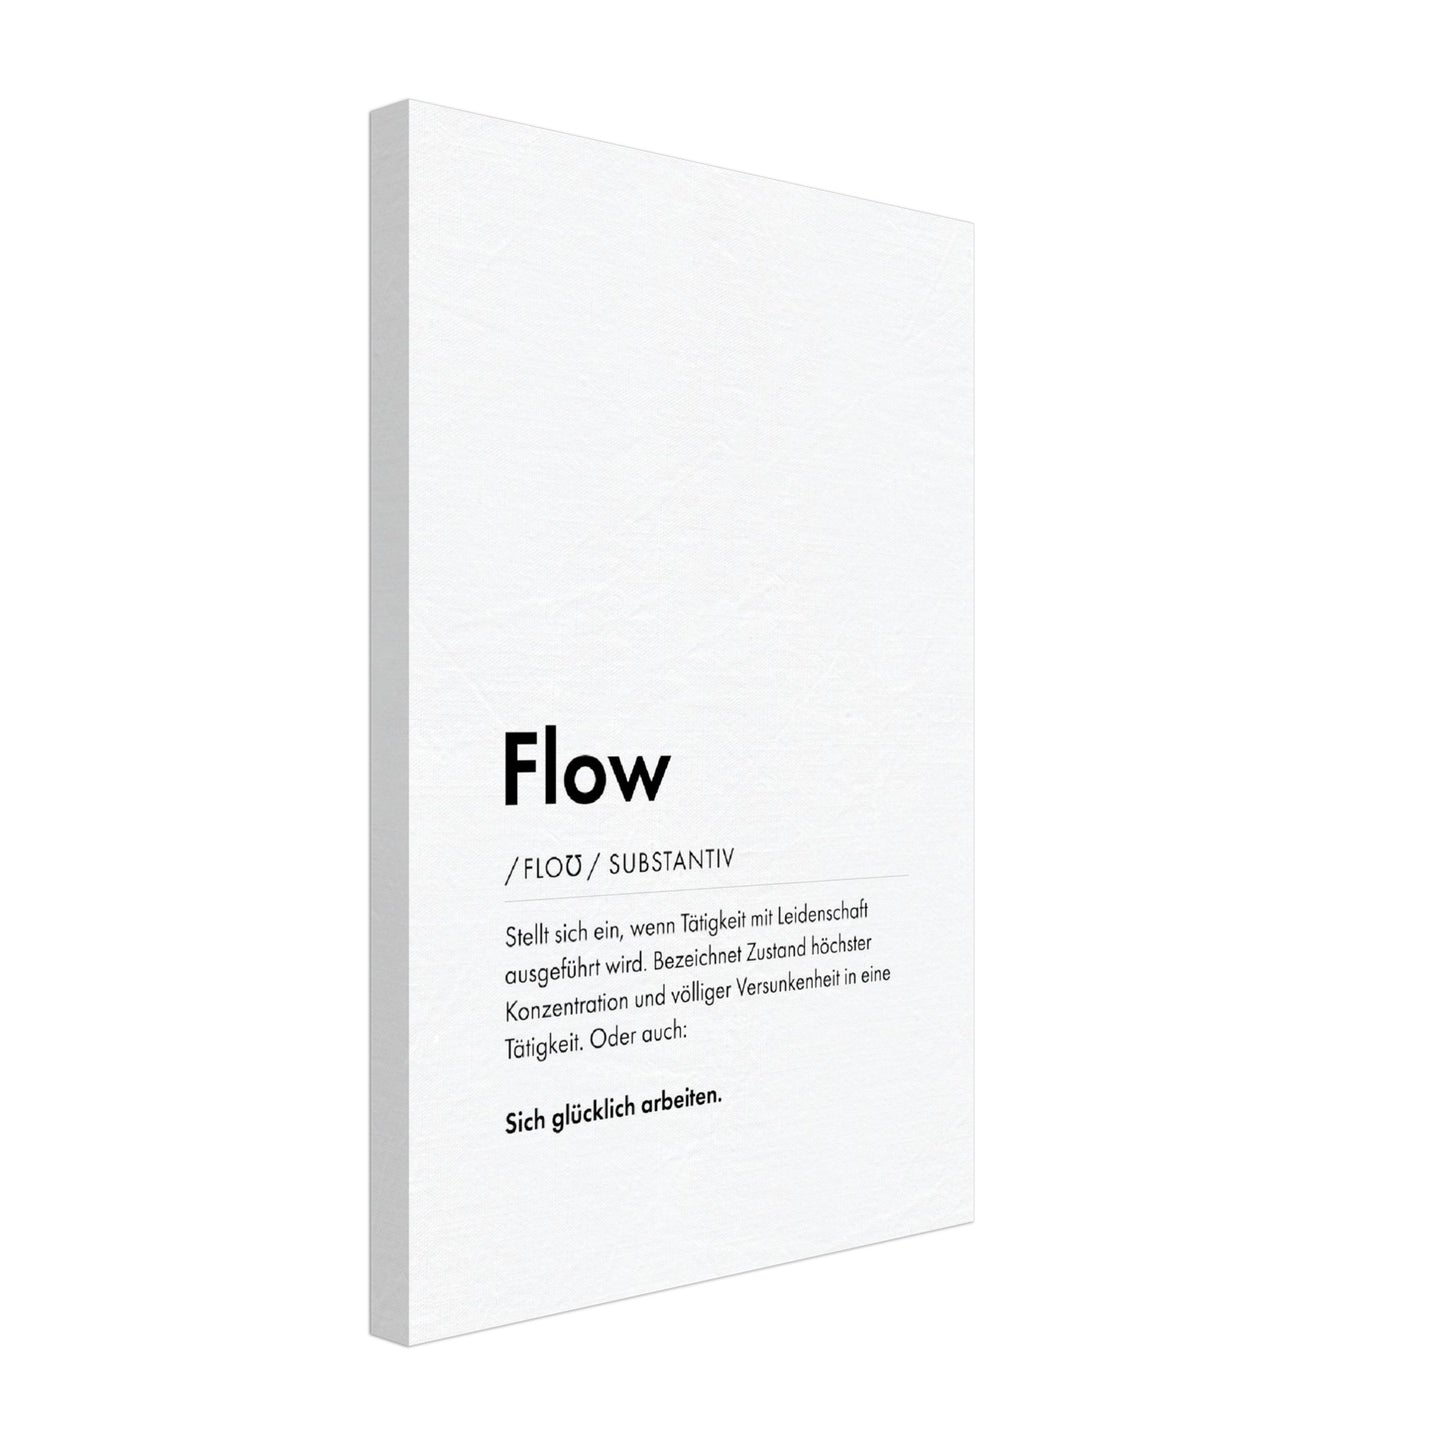 Flow - Wortdefinition-Wandbild - Leinwand Weiss Neutral im Hochformat - Typografie Worte Sprache Business Job